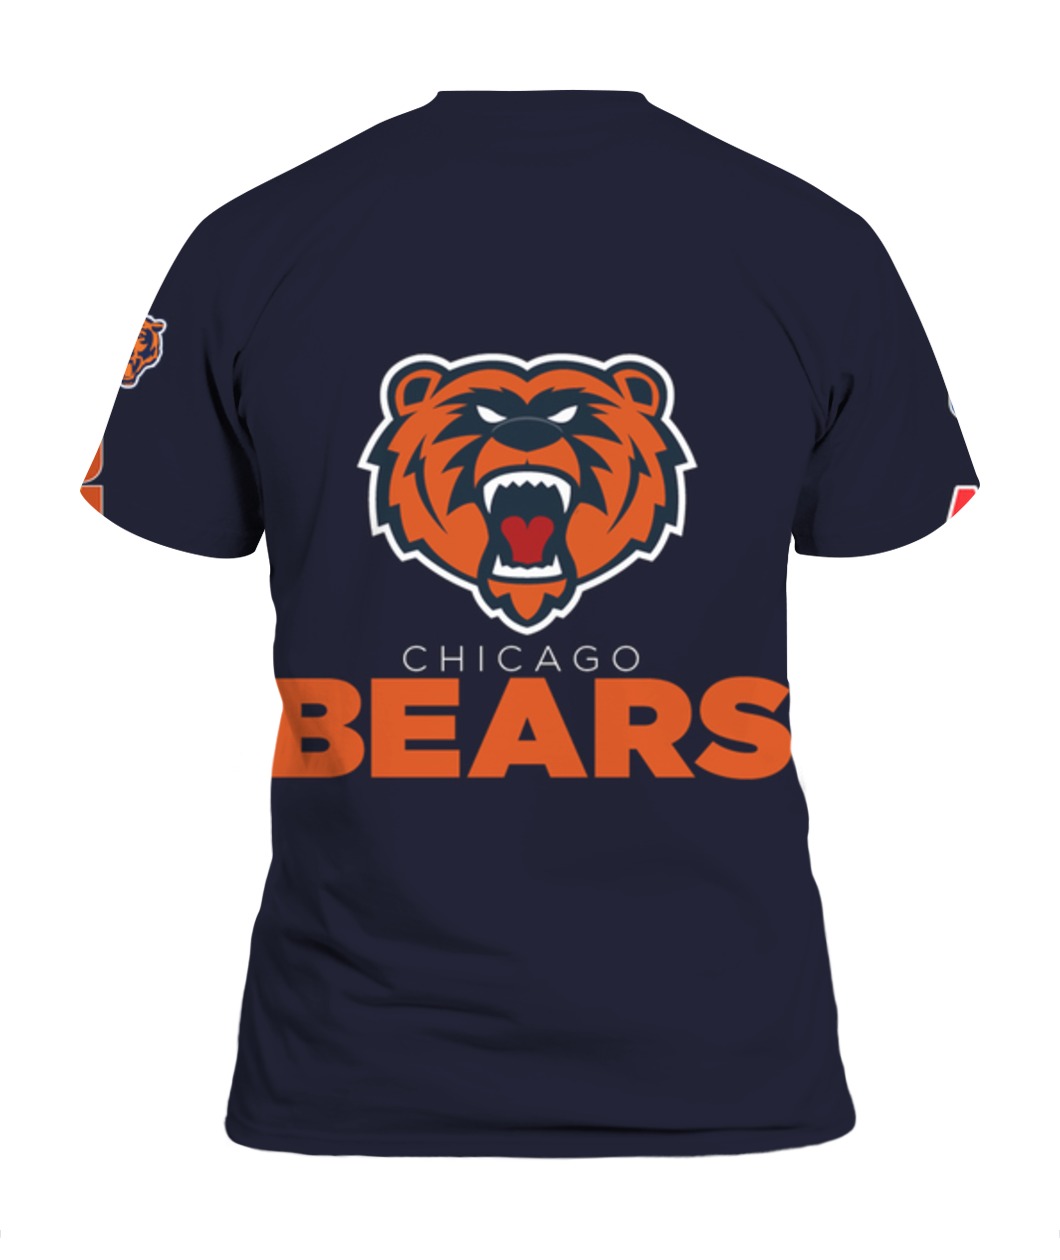 Chicago bears mascot all over print tshirt - back